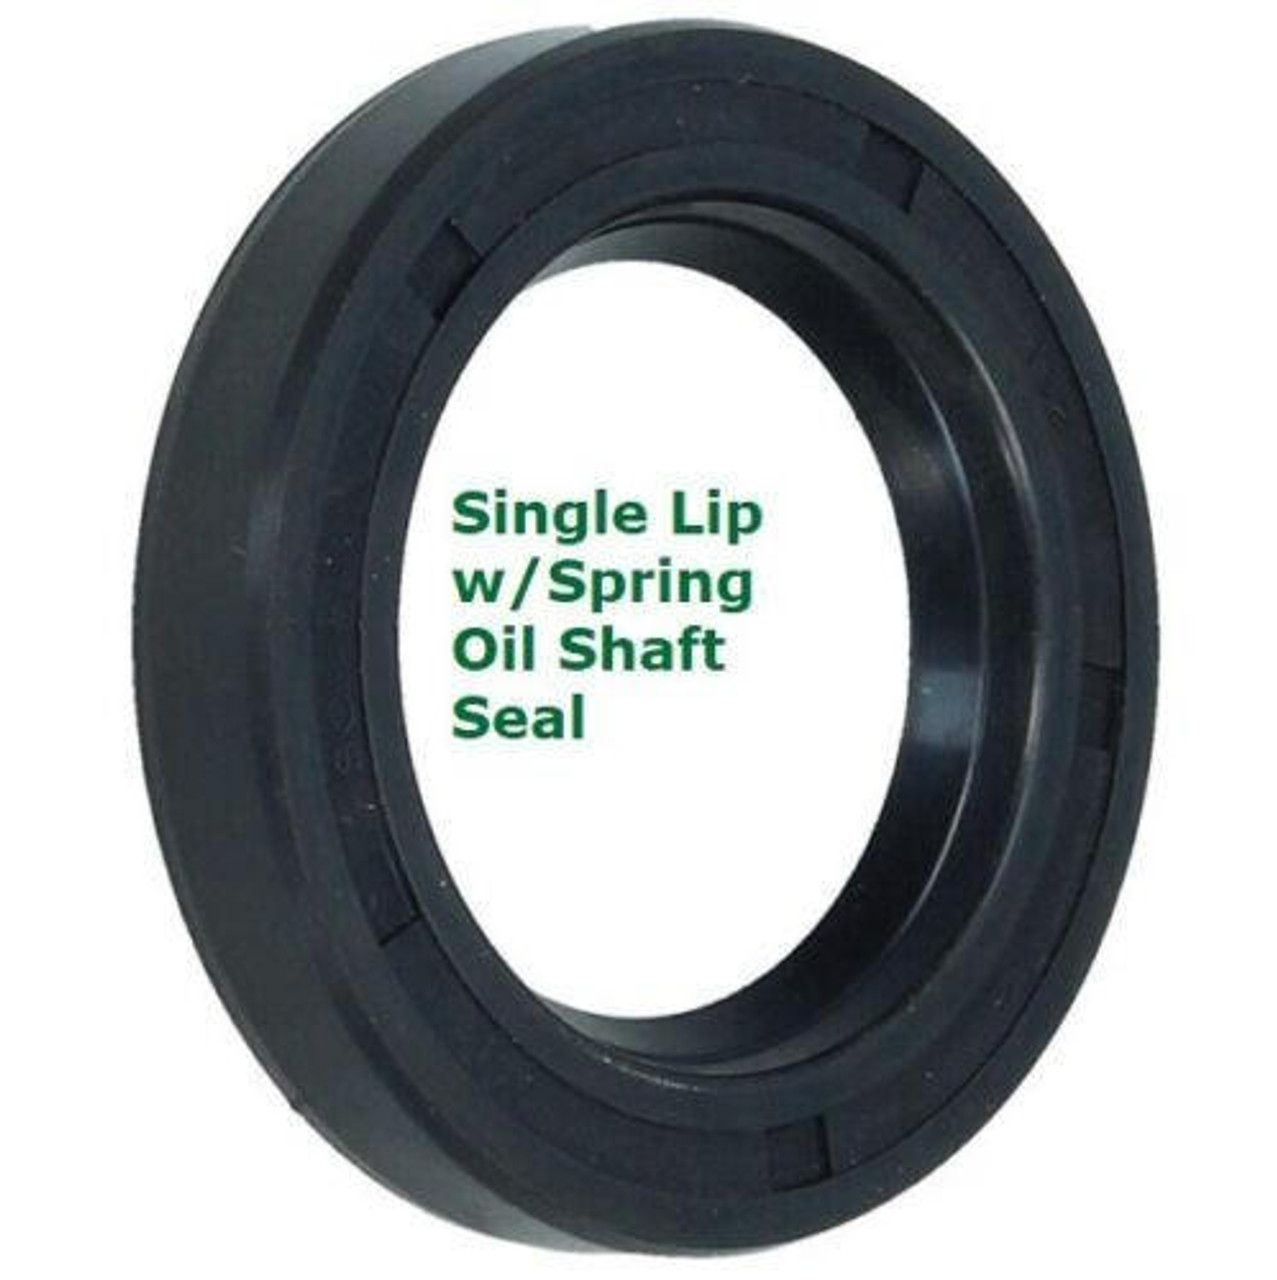 Metric Oil Shaft Seal 260 x 300 x 15mm   Single Lip   Price for 1 pc